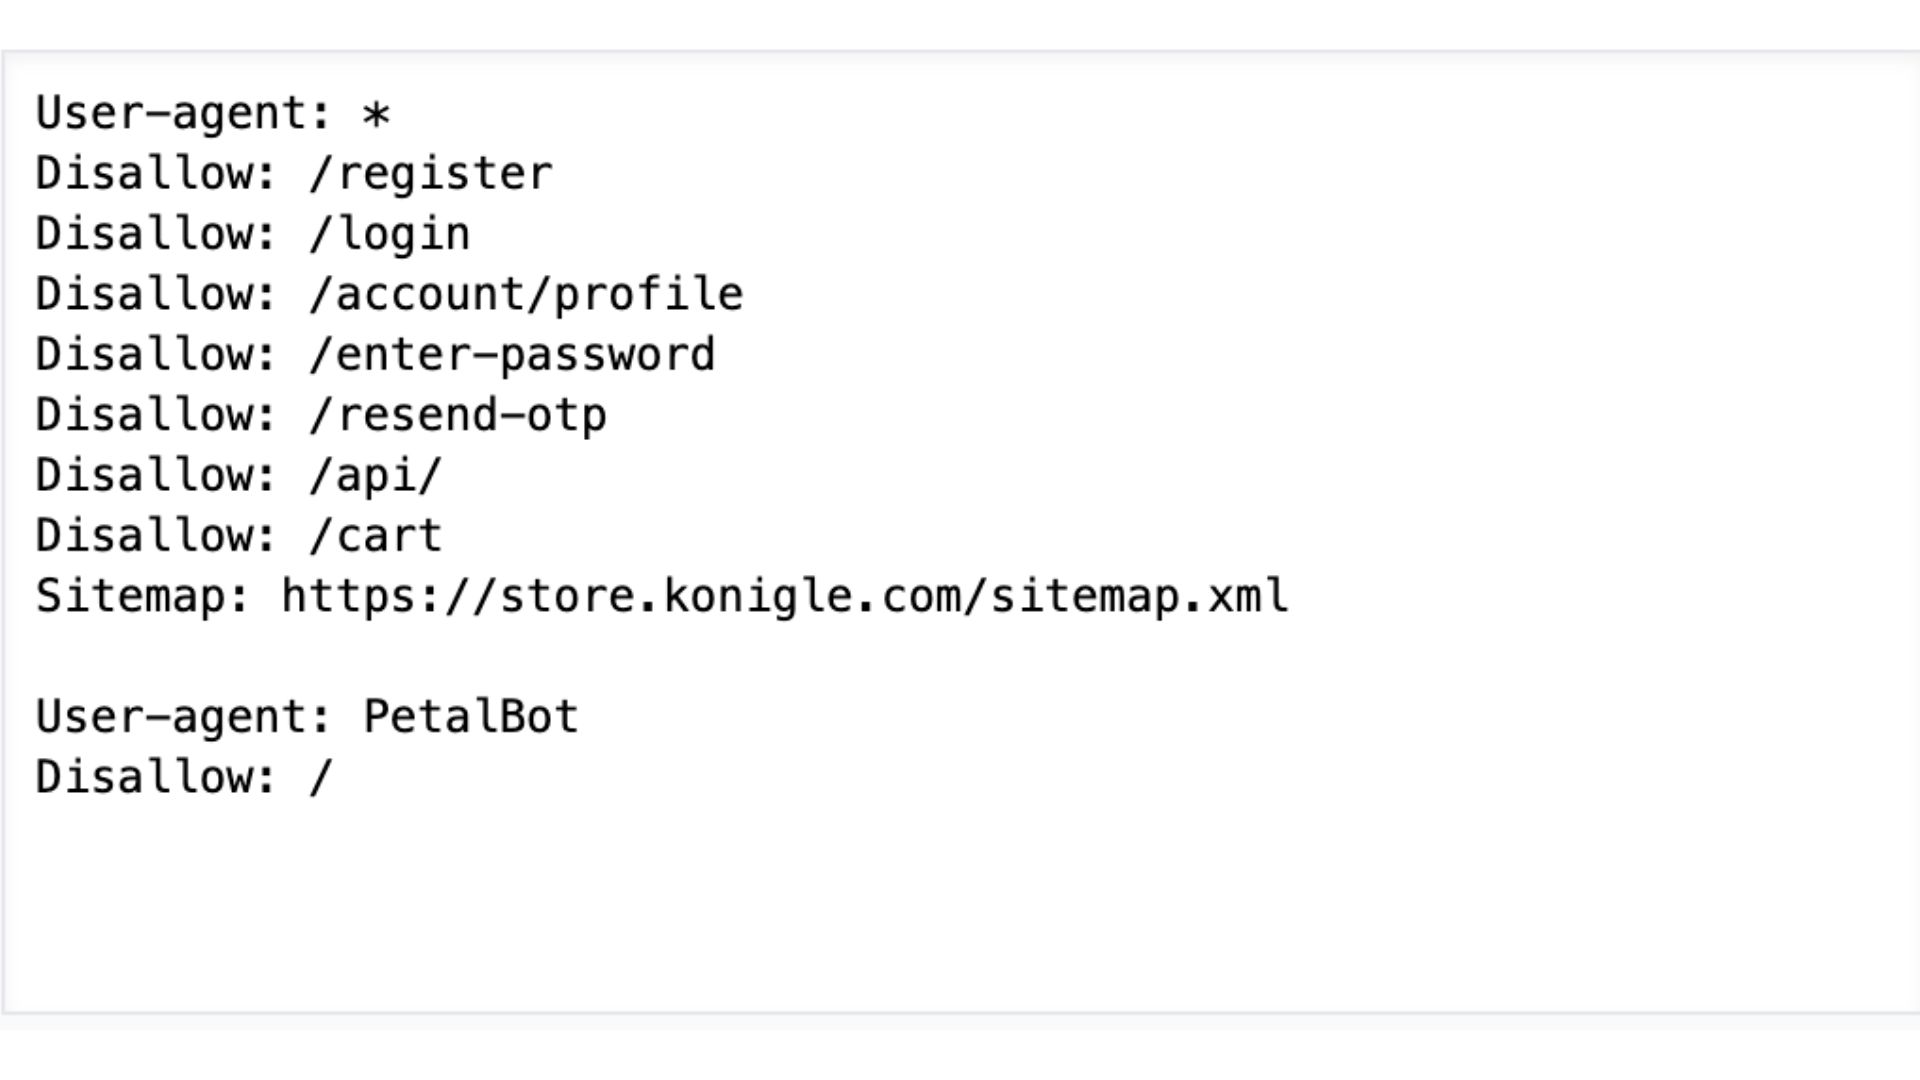 A default robots.txt file for all Konigle sites